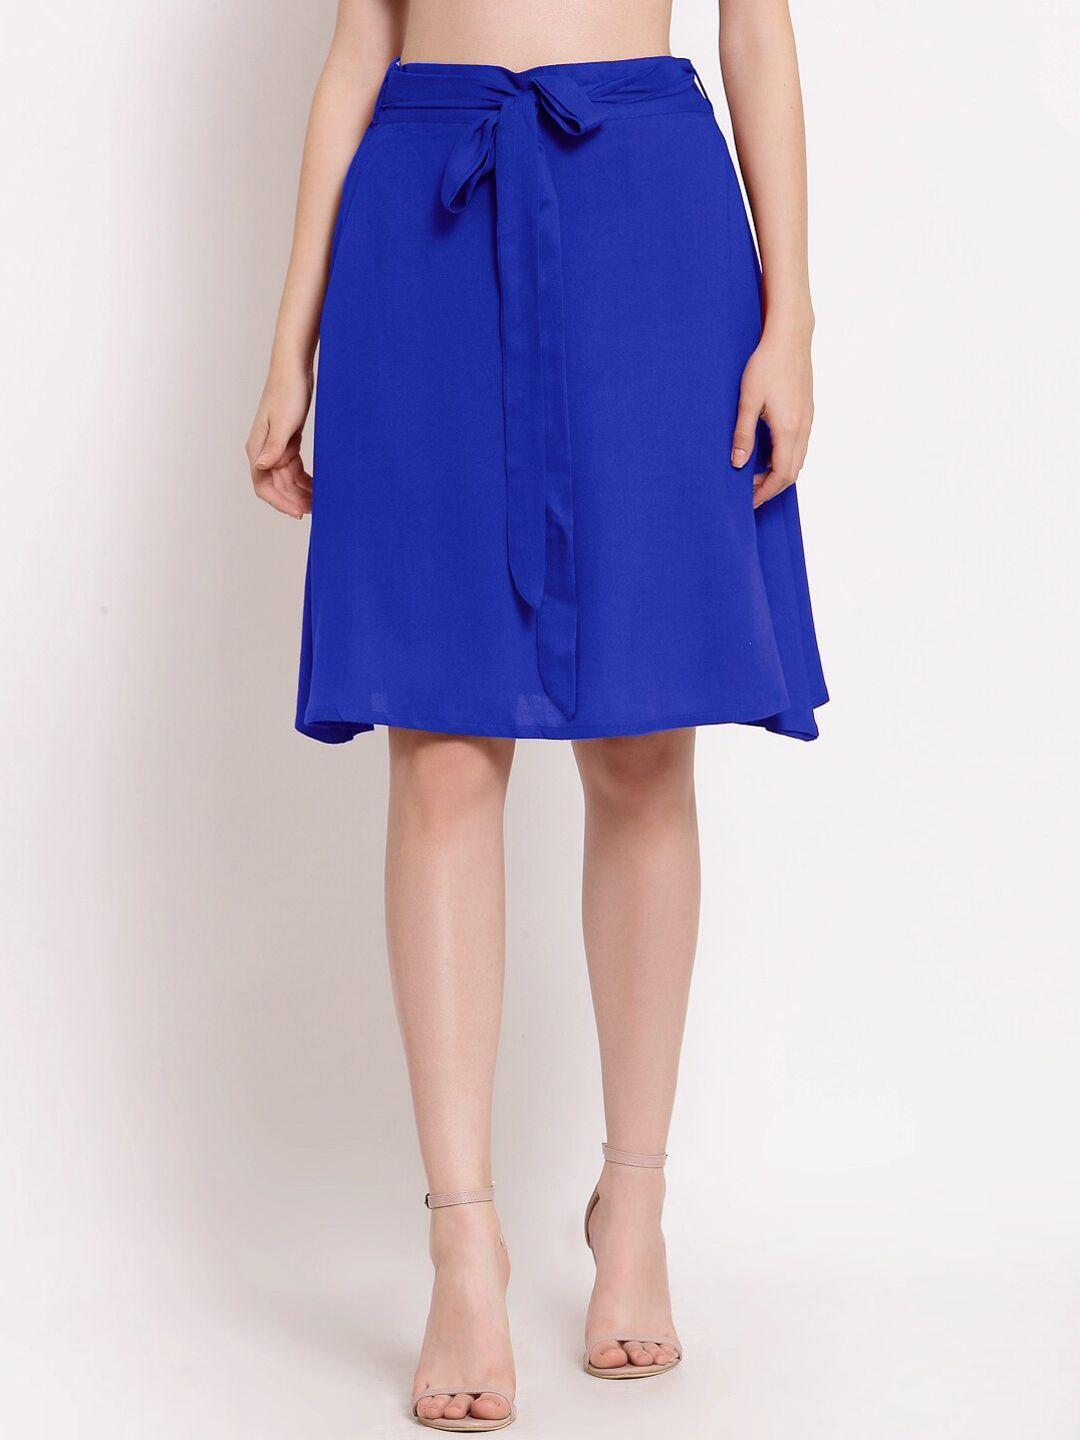 patrorna women blue solid a-line skirt